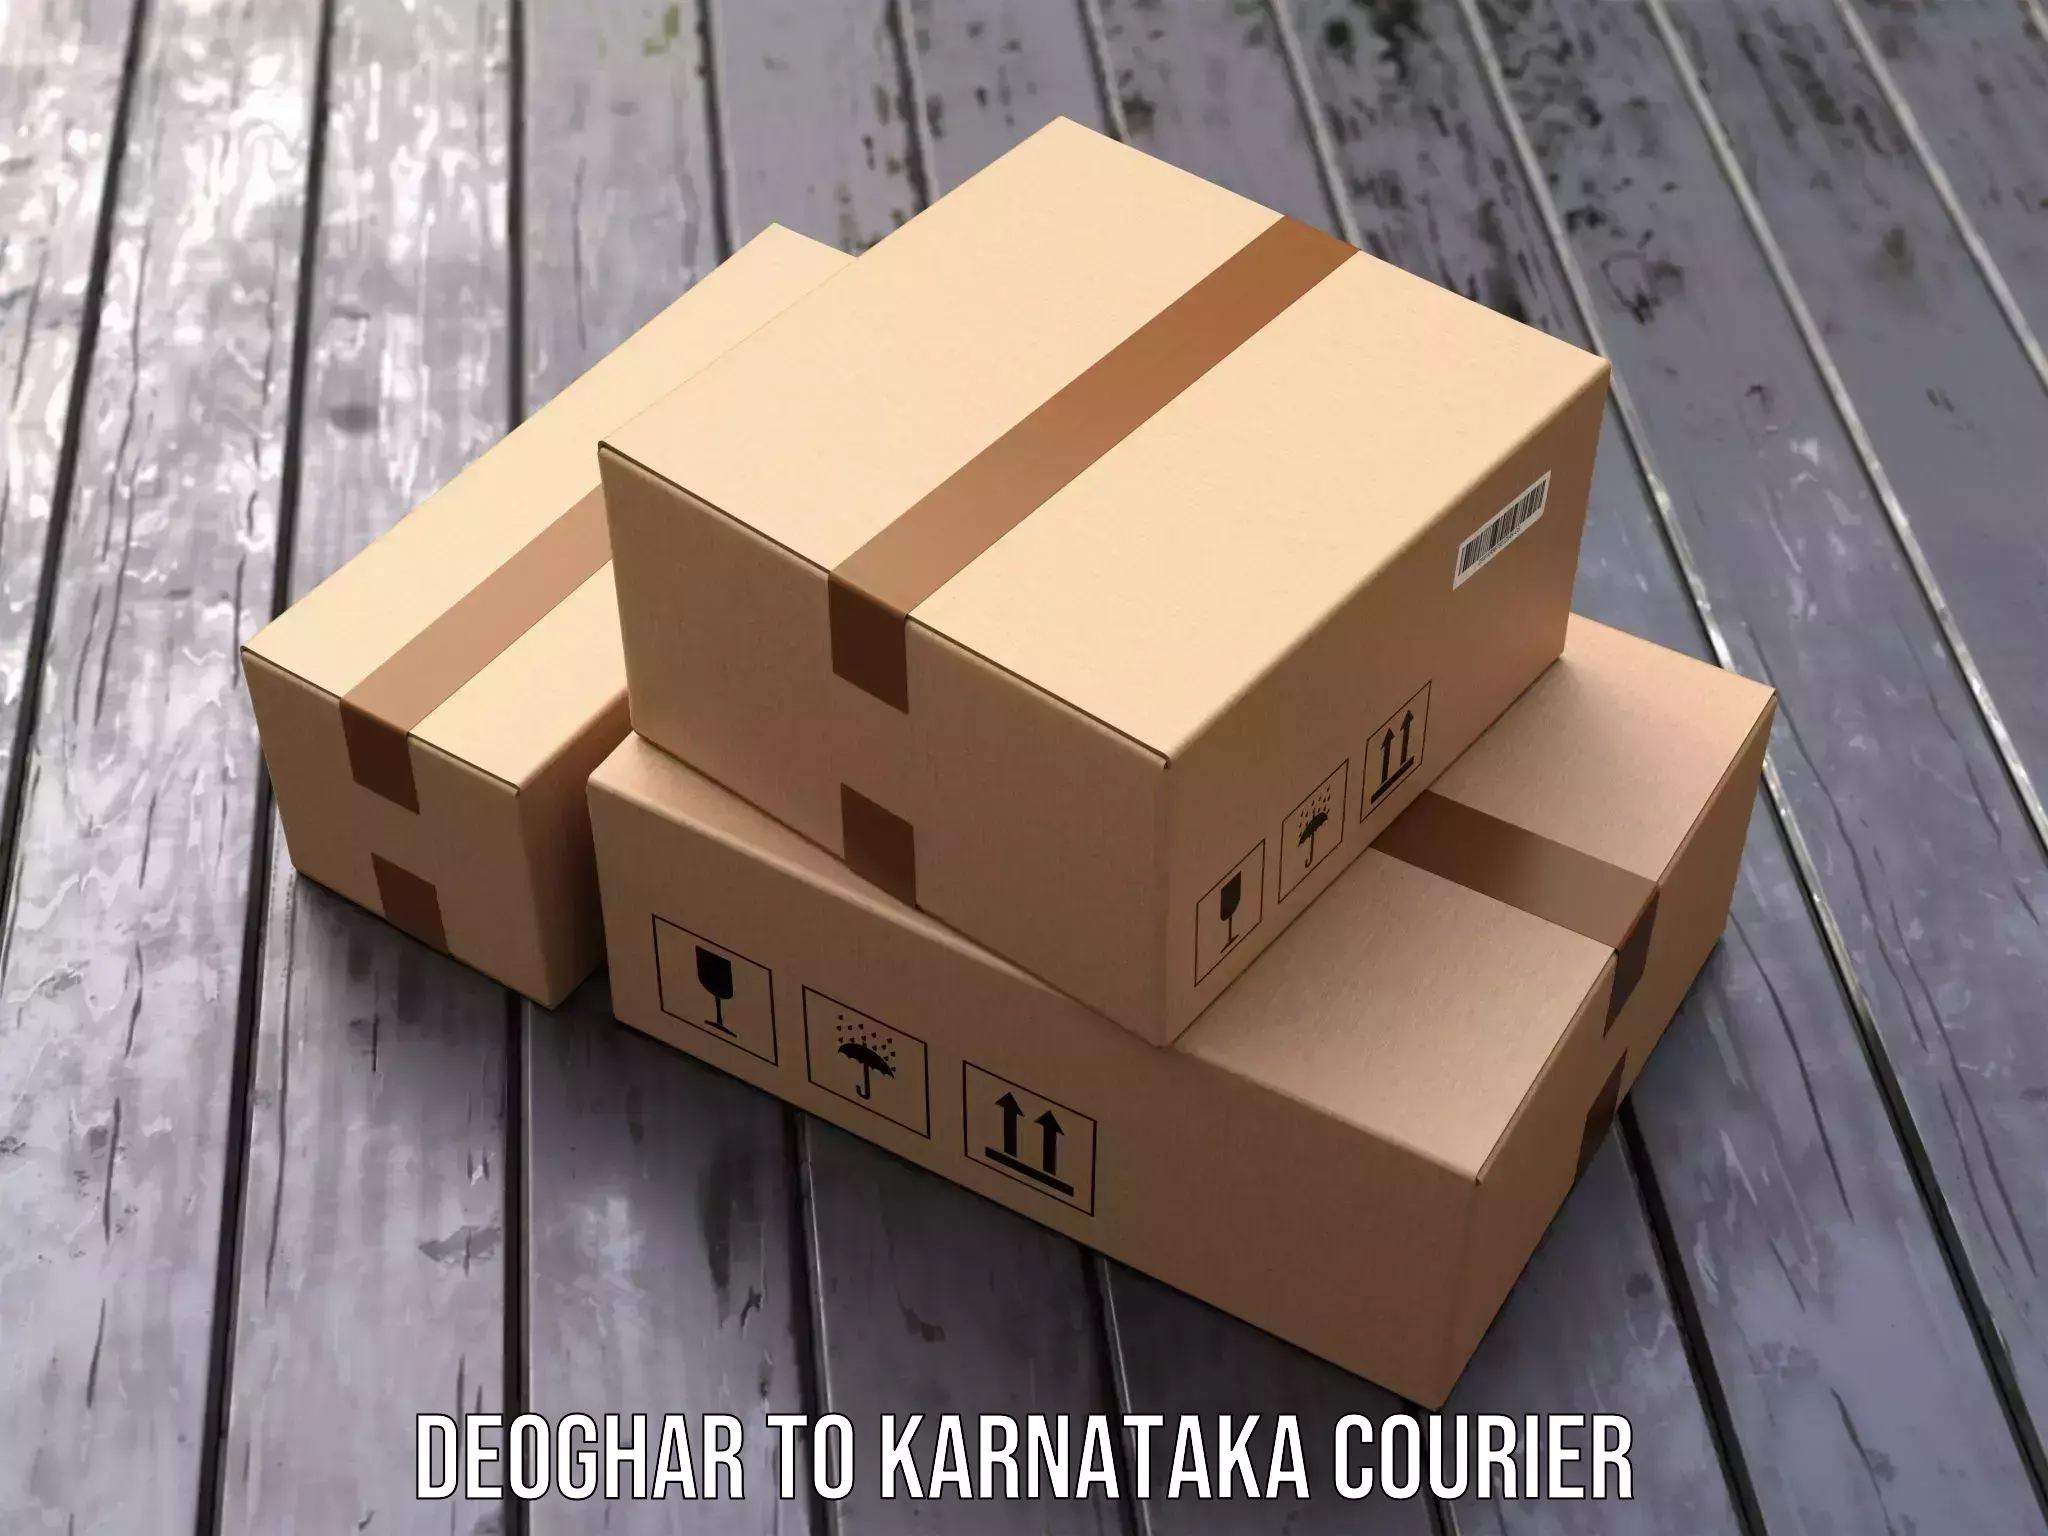 Global courier networks Deoghar to Karnataka